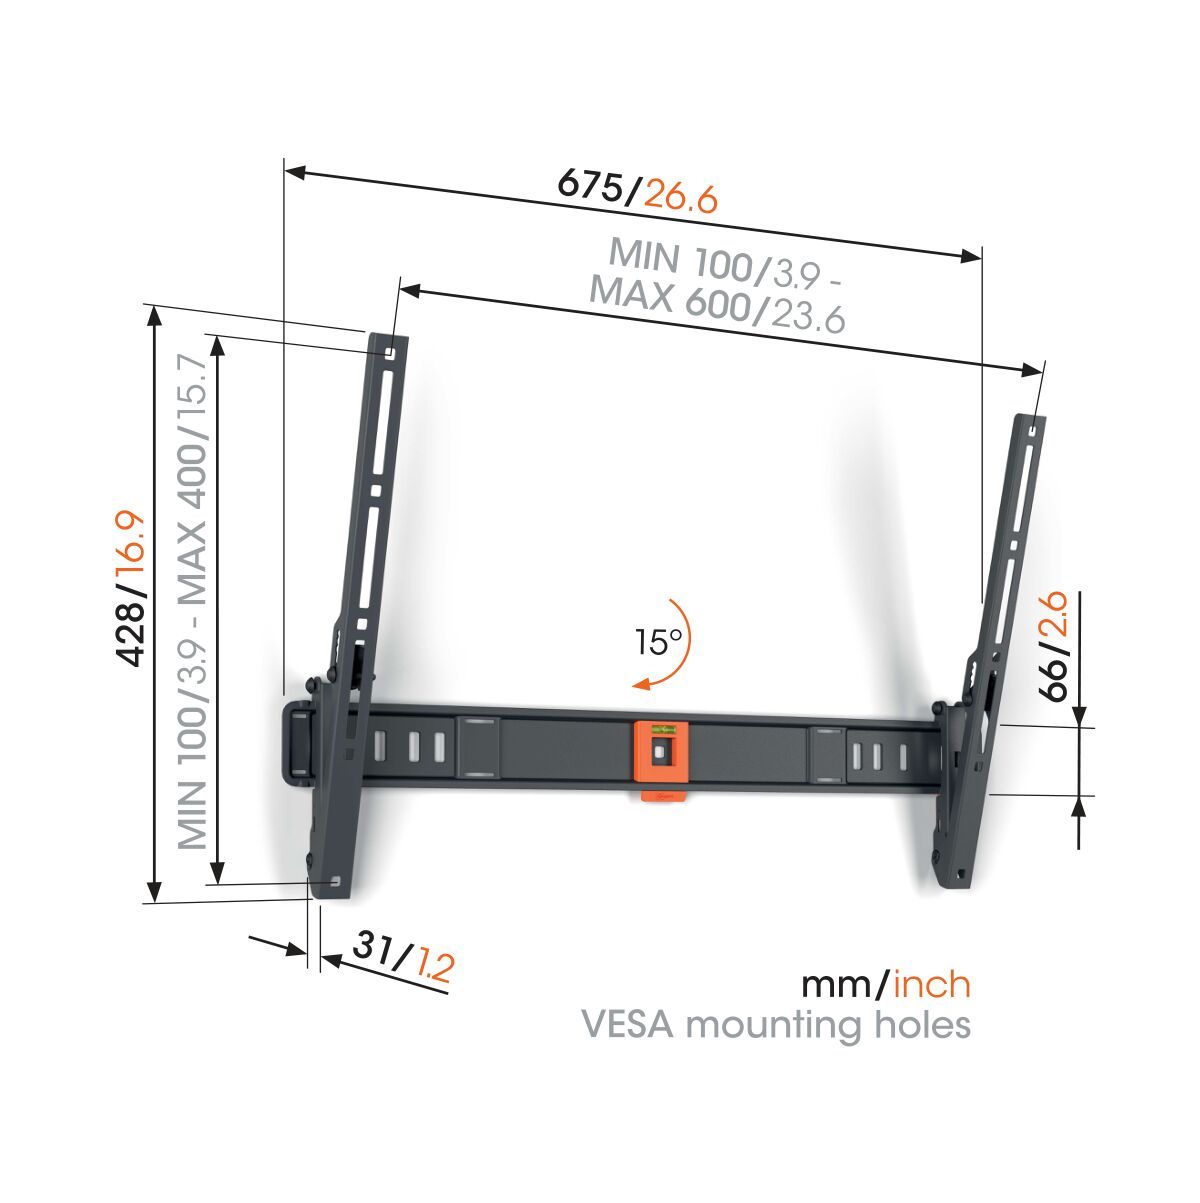 Vogel's TVM 1615 Tilting TV Wall Mount - Suitable for 40 up to 77 inch TVs - Tilt up to 15° - Dimensions